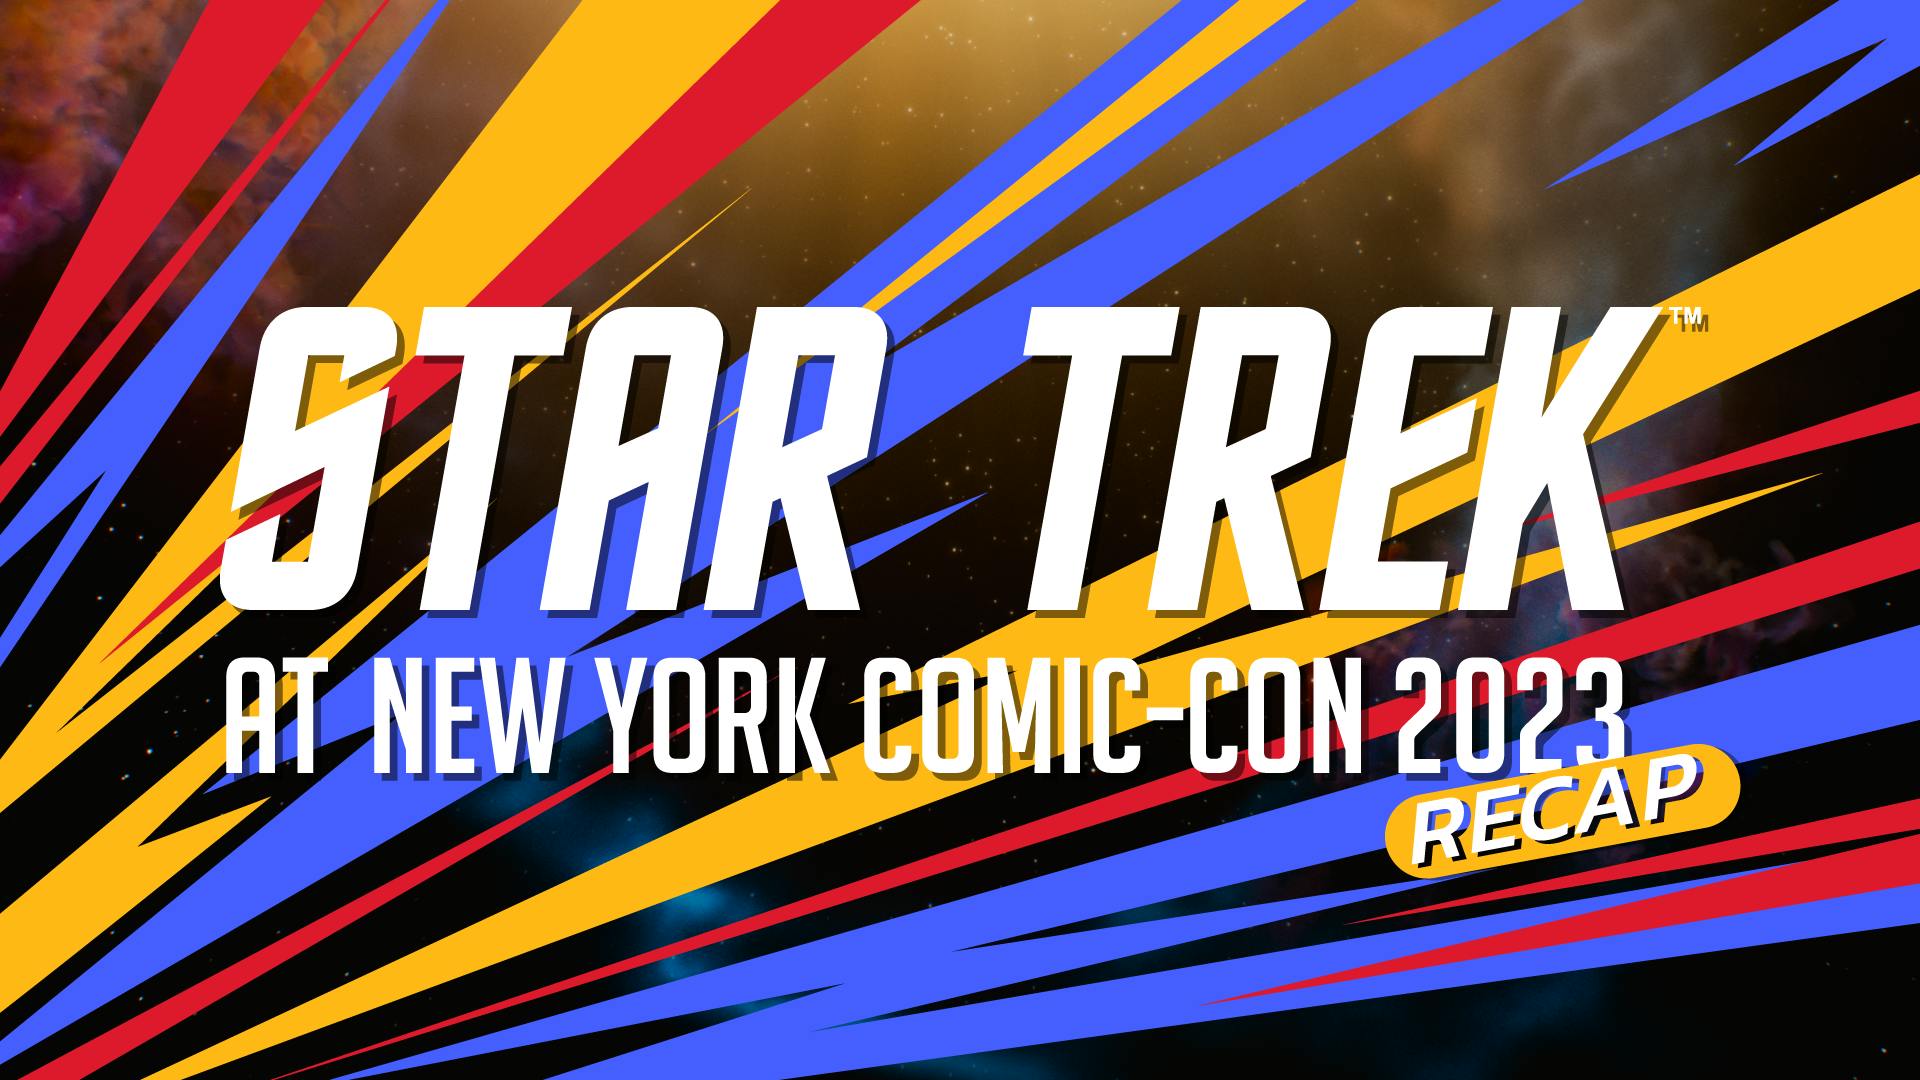 Star Trek at New York Comic Con 2023 Recap banner